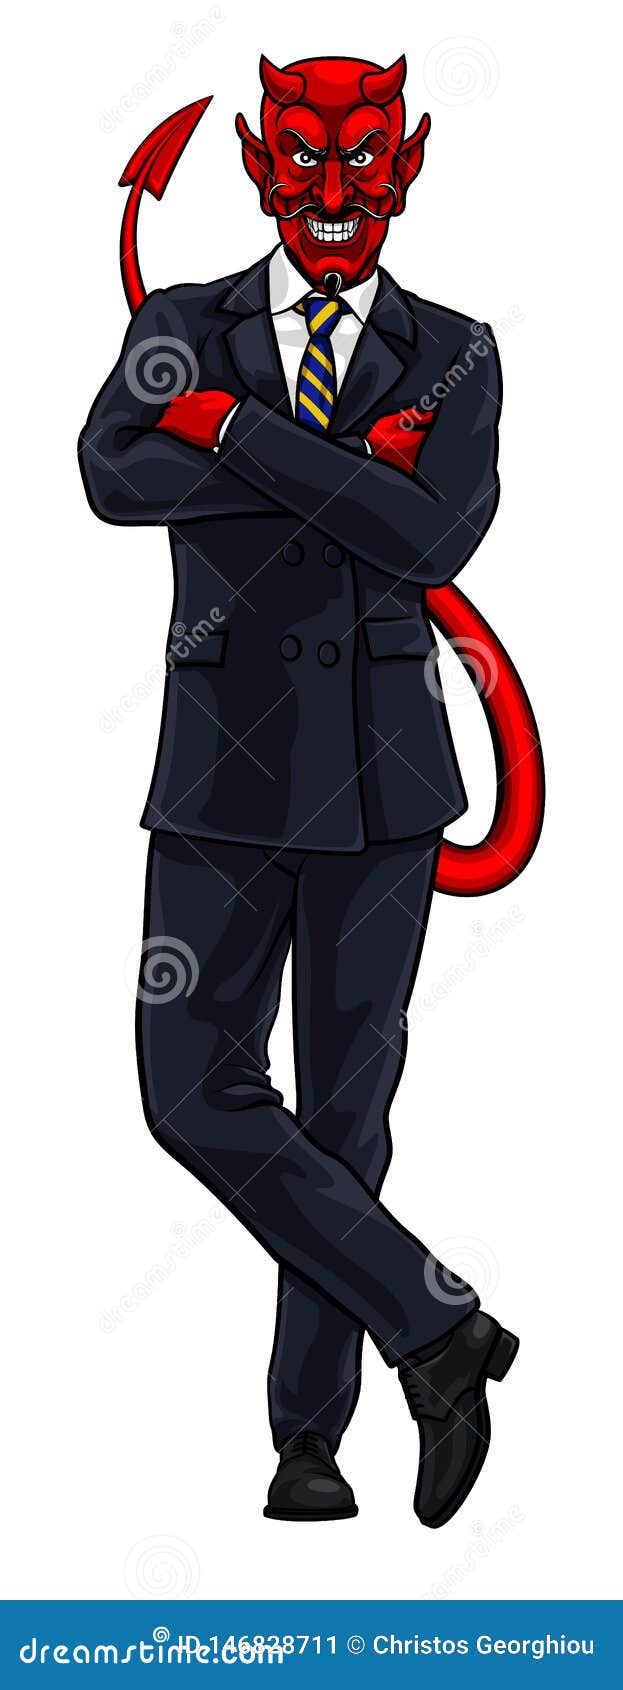 Businessman Evil Devil in Suit Stock Vector - Illustration of halloween,  deal: 146828711